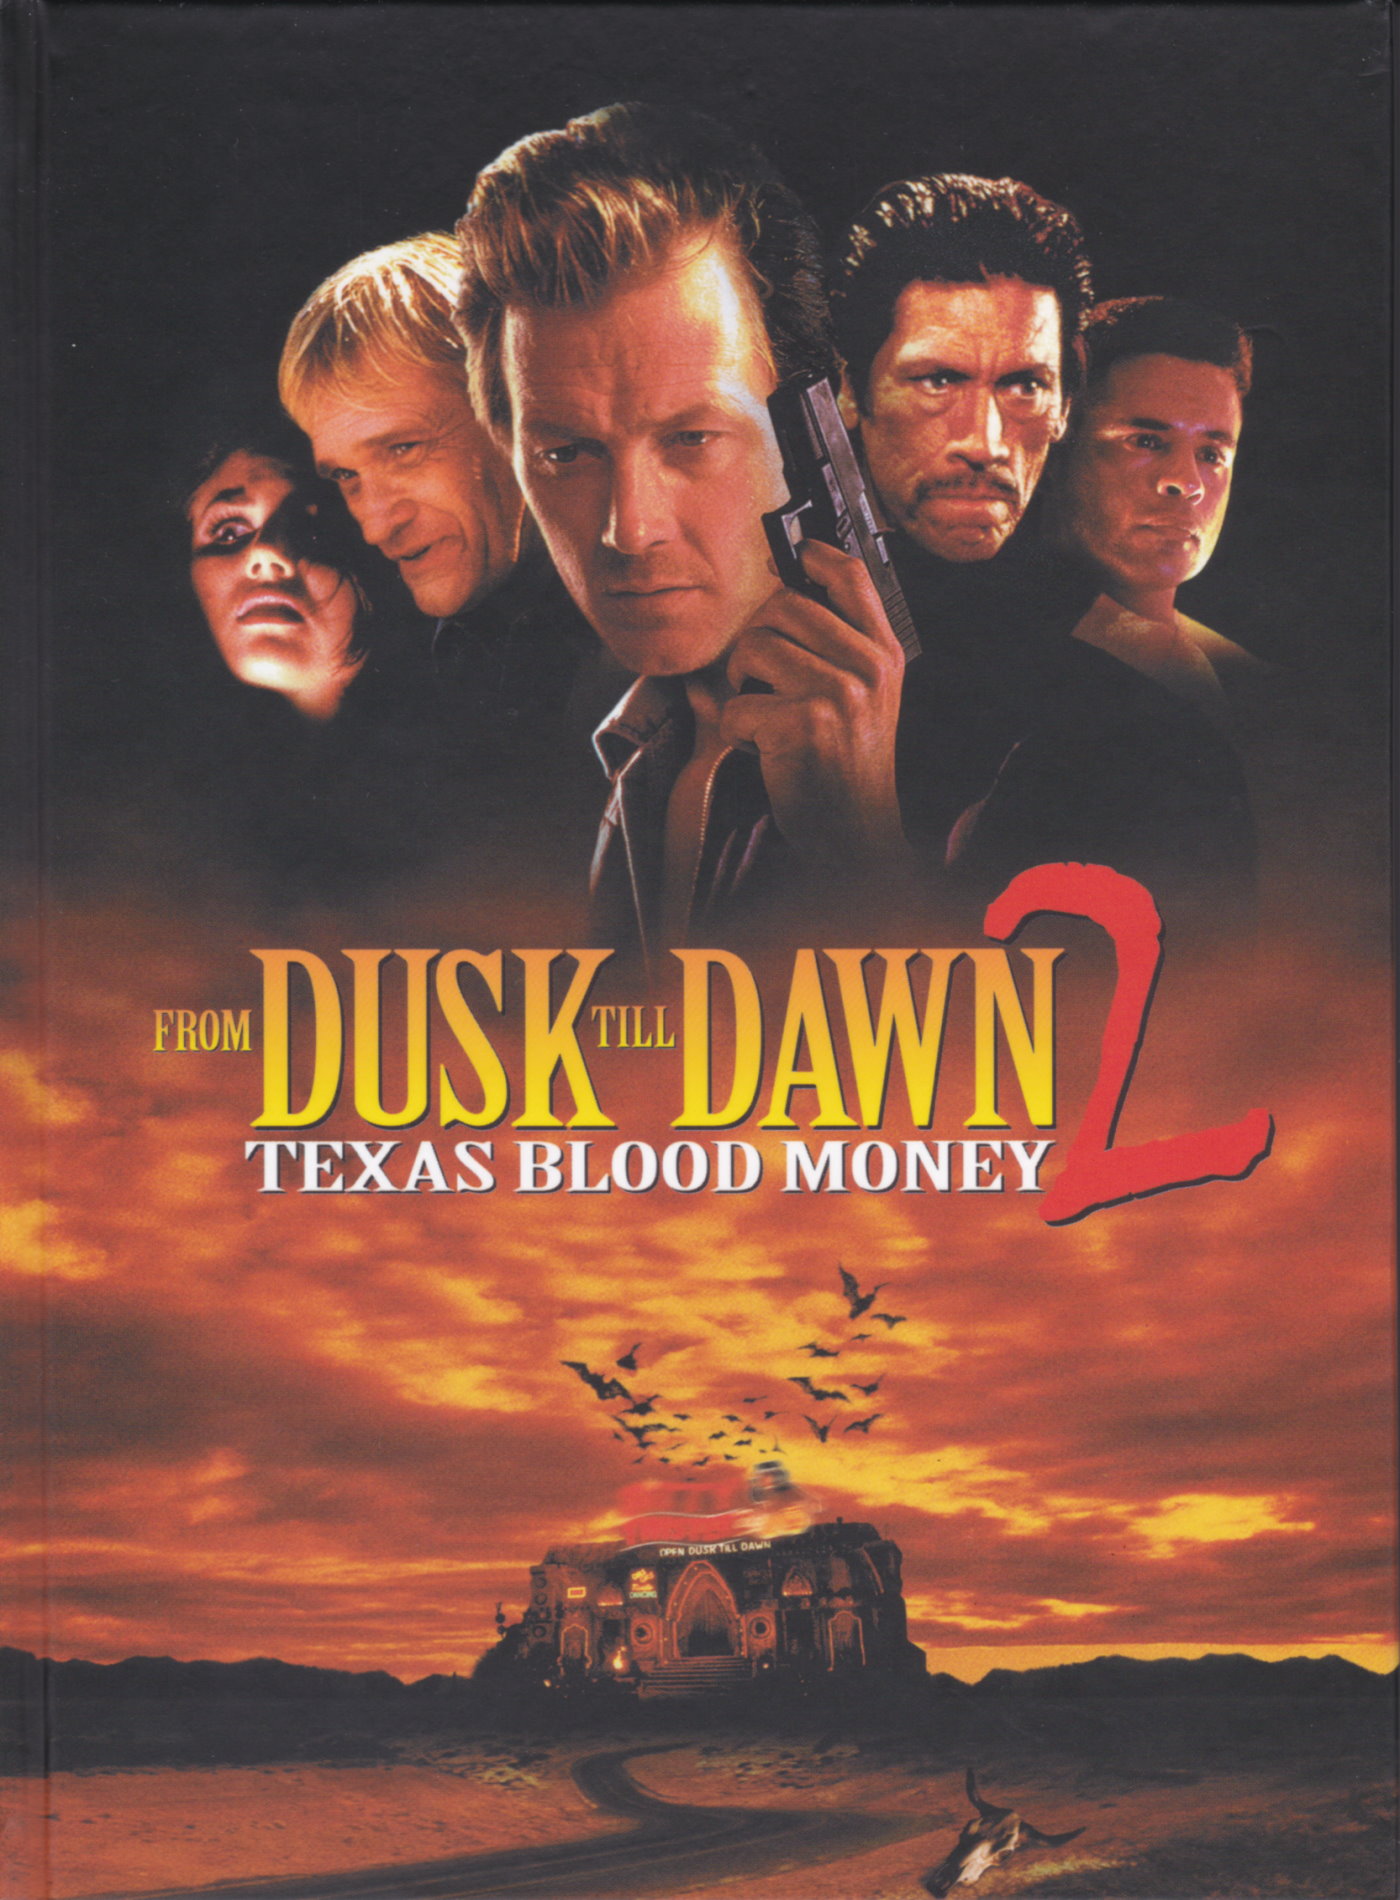 Cover - From Dusk Till Dawn 2 - Texas Blood Money.jpg